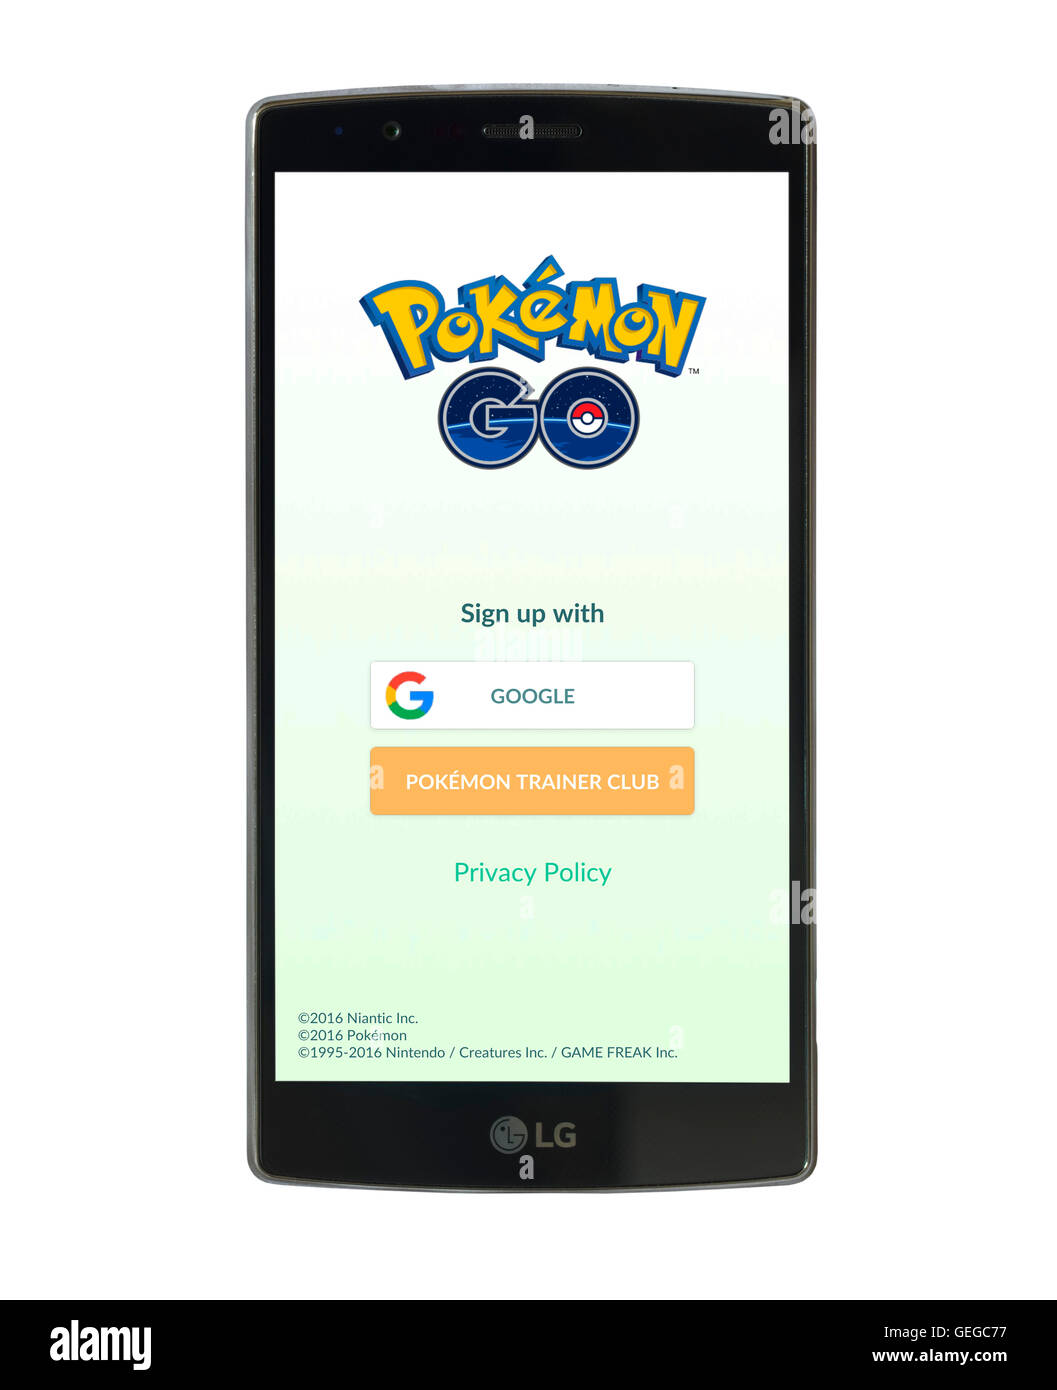 Pokemon Go on an LG G4 Smartphone Stock Photo